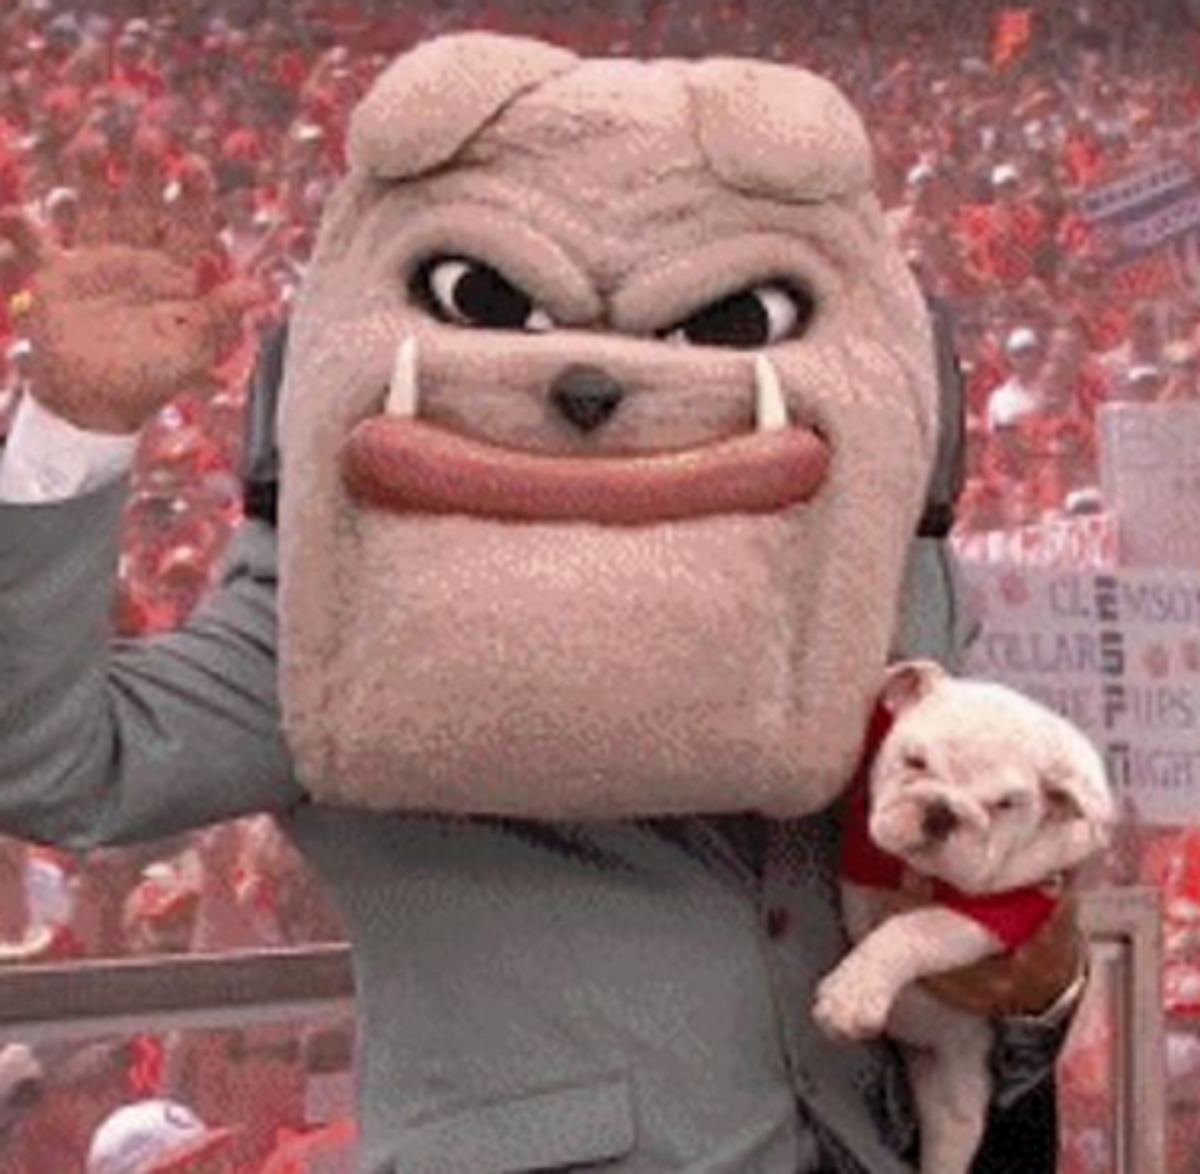 Lee Corso wearing the Georgia Bulldog mascot head.